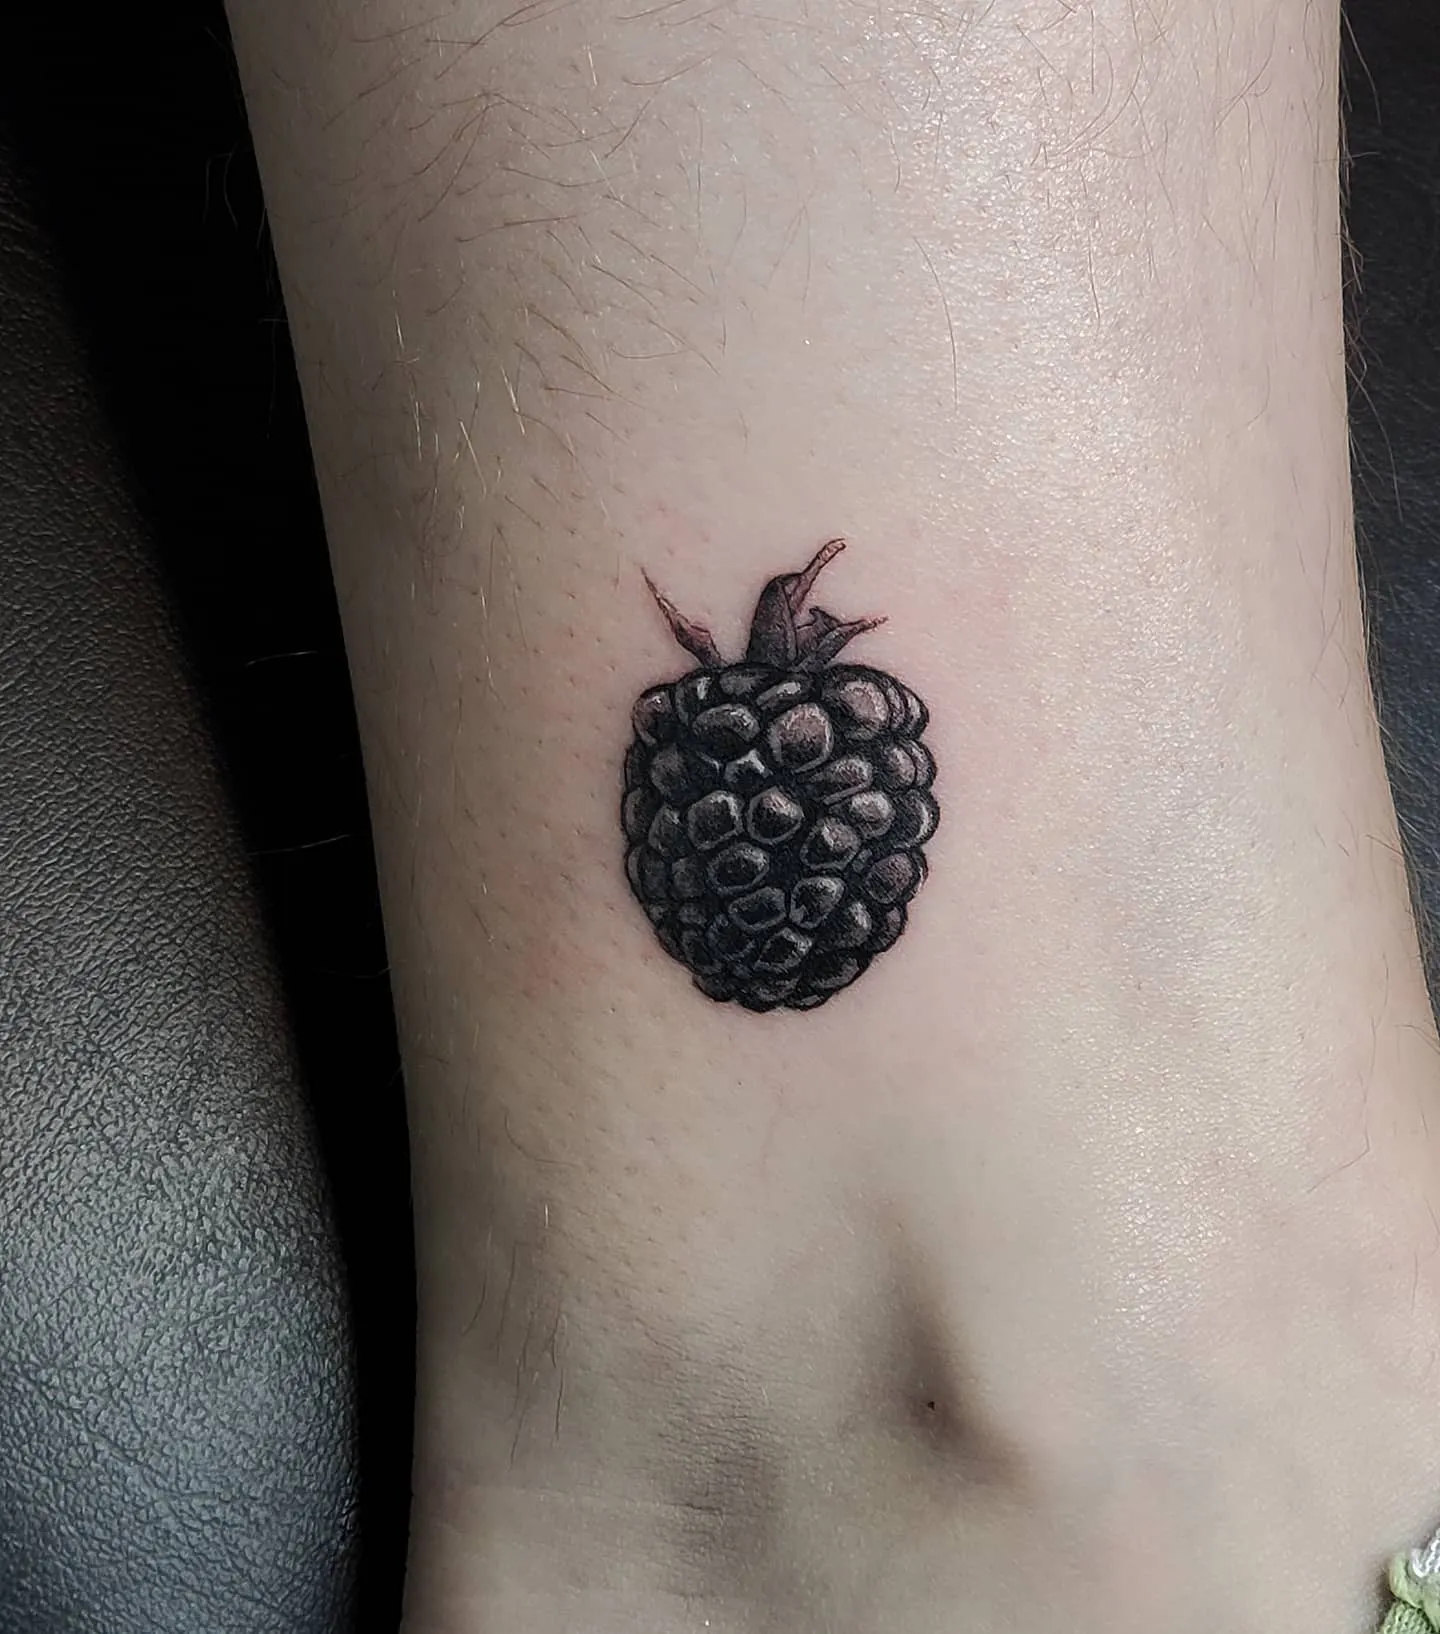 Intricate Blackberry Fruit Ink on Wrist